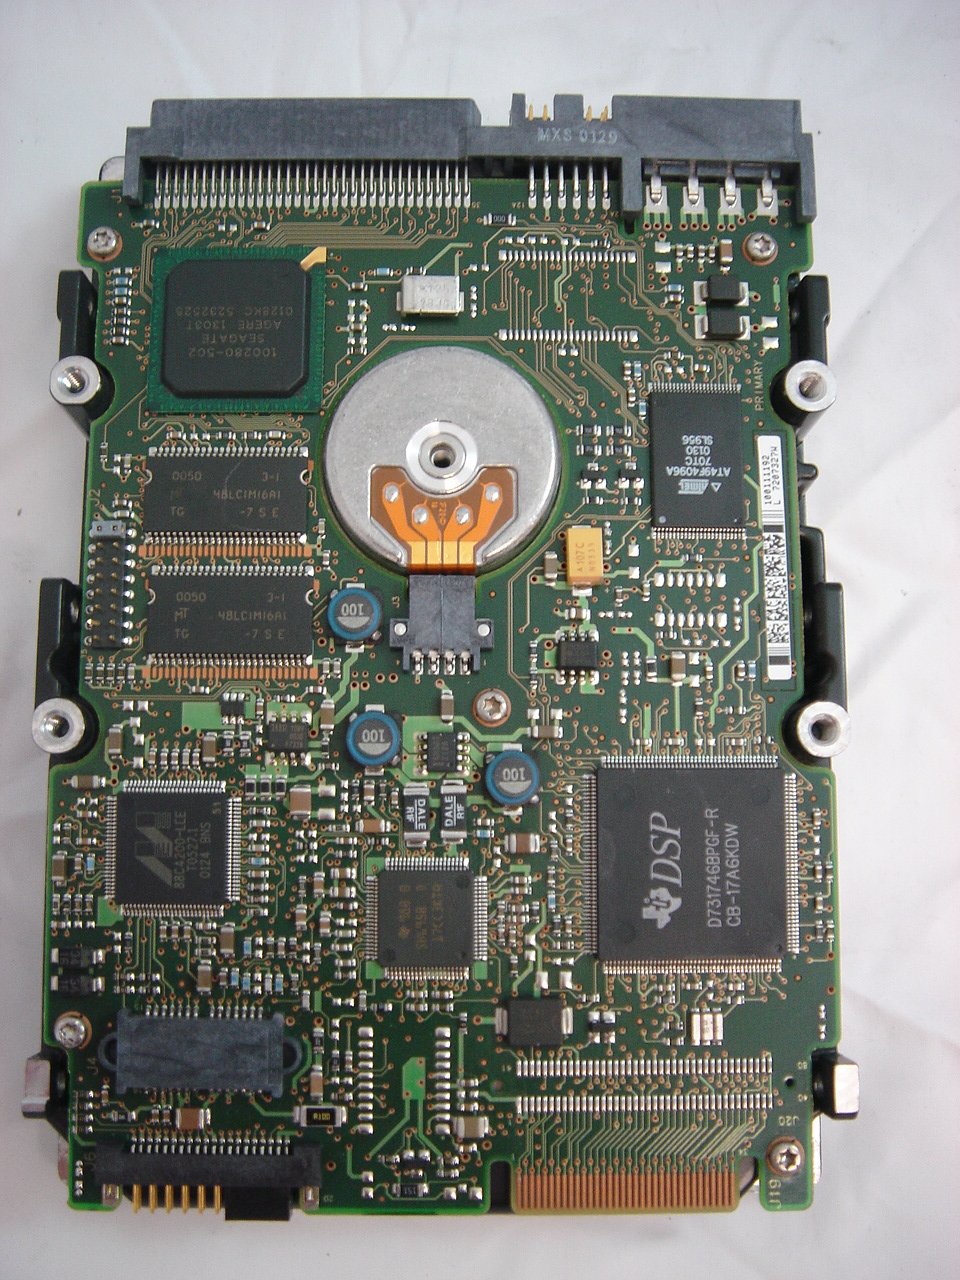 9P7002-302 - Seagate 18.4GB SCSI 68 Pin 10Krpm 3.5in Cheetah HDD - USED